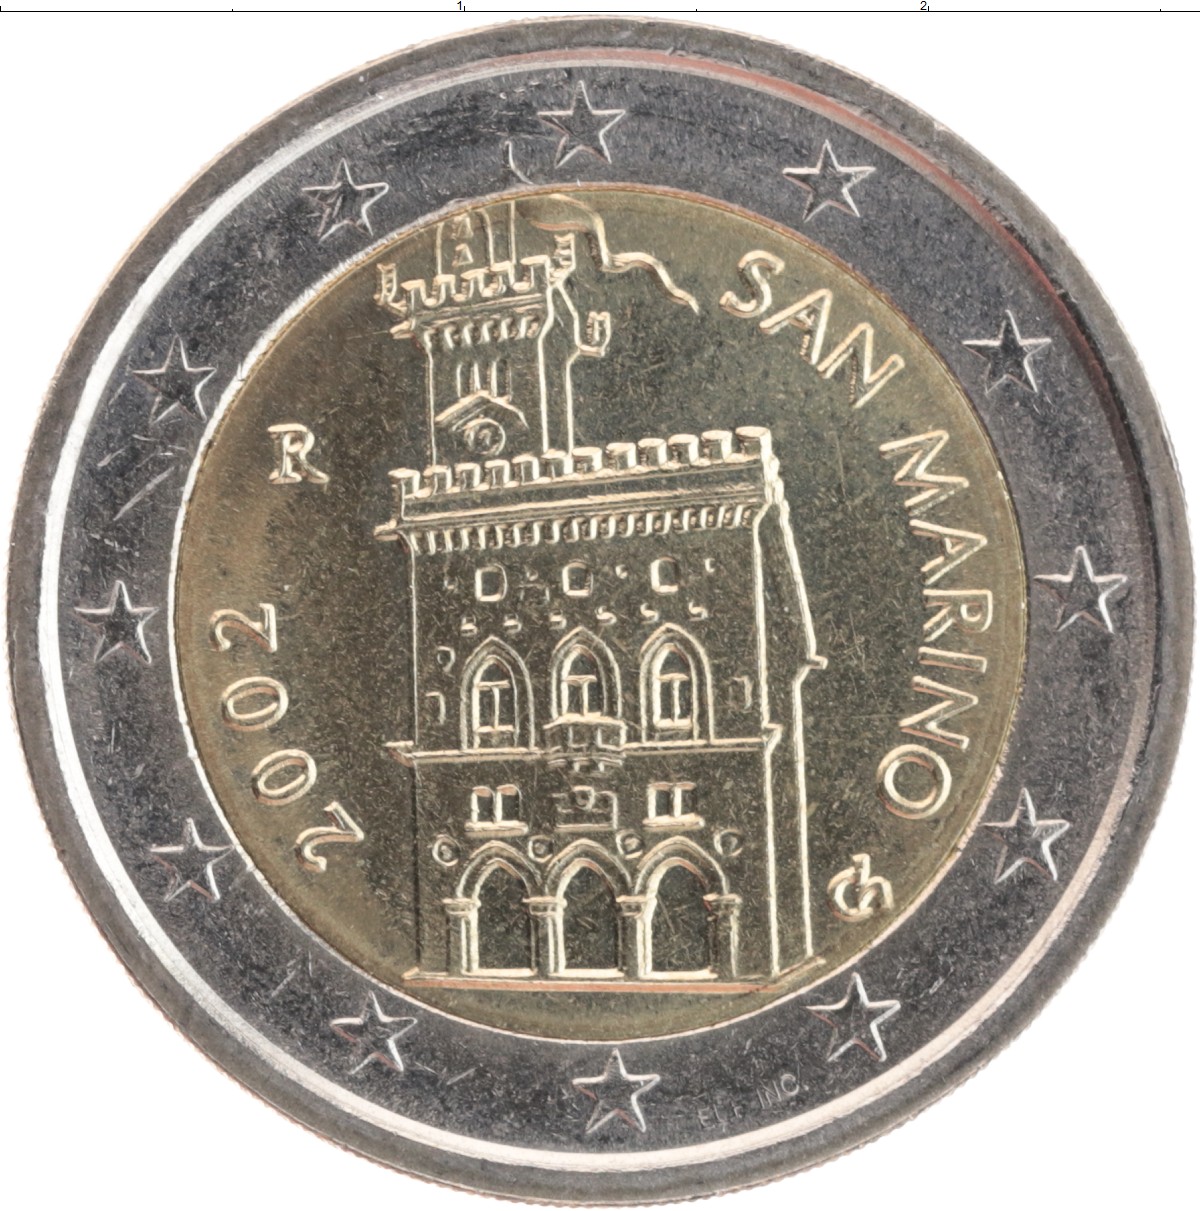 Евро сан марино. Монеты евро Сан-Марино. 2 Евро Сан Марино. Монета 2 евро Сан Марино 2007. 2 Евро Сан Марино 2002.